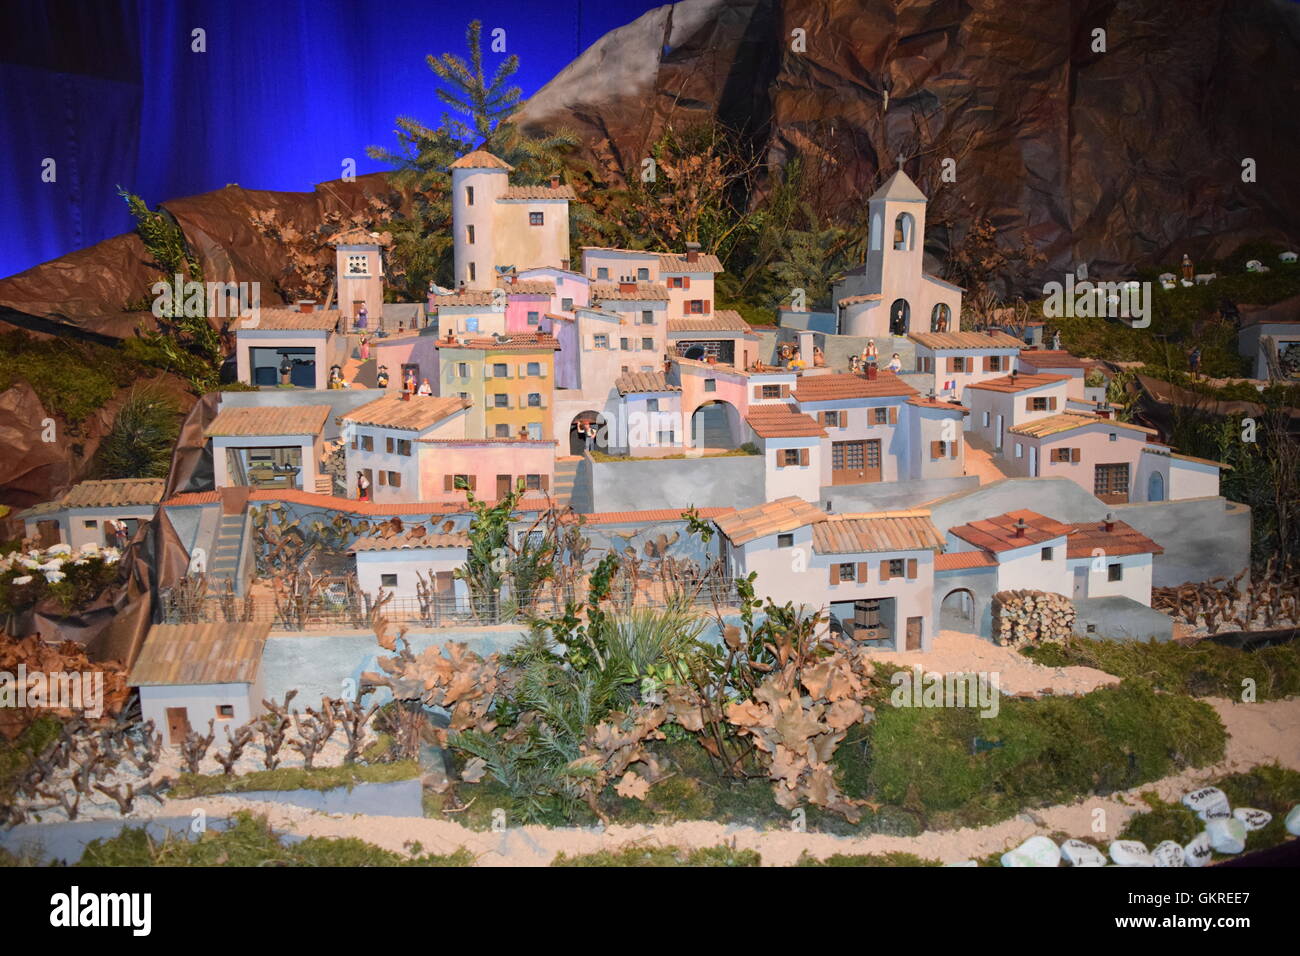 Little village in Provence for nativity scene Stock Photo